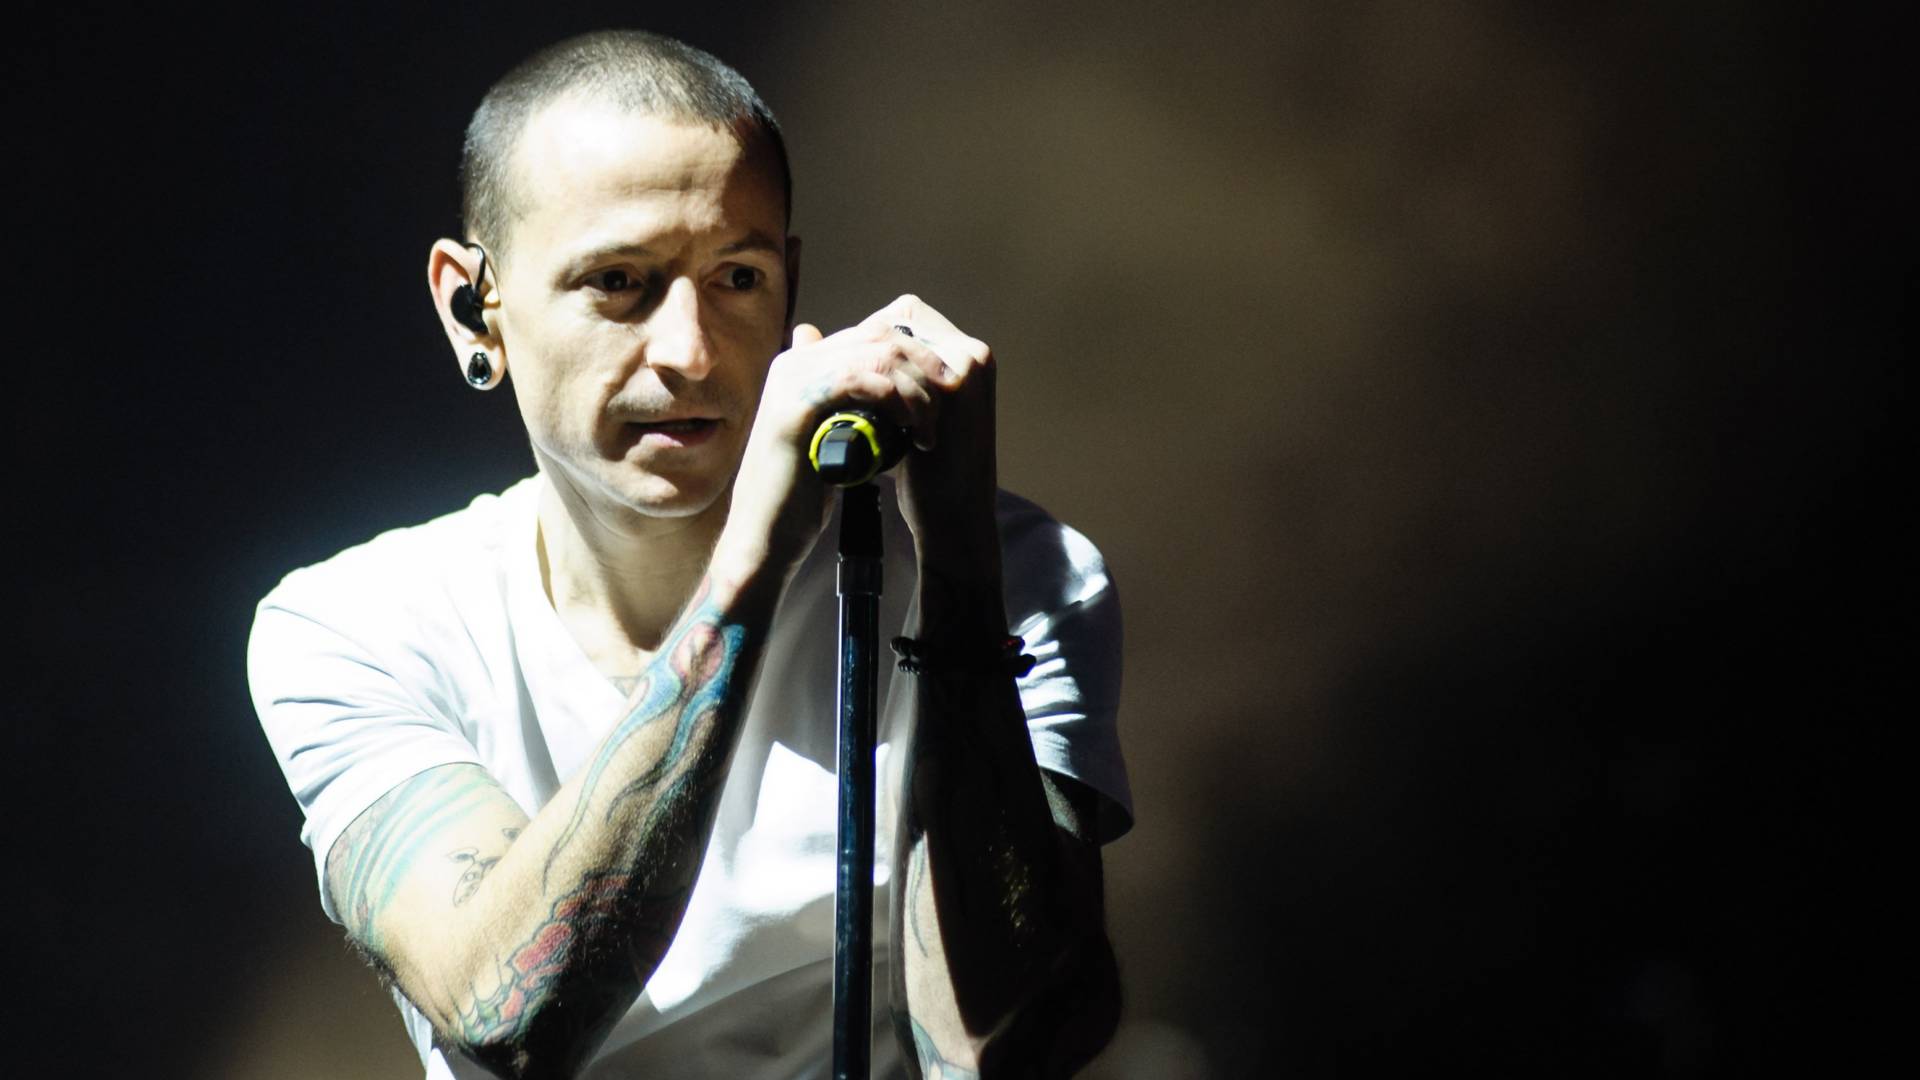 Basista Linkin Parka progovorio o Česteru Beningtonu na godišnjicu smrti